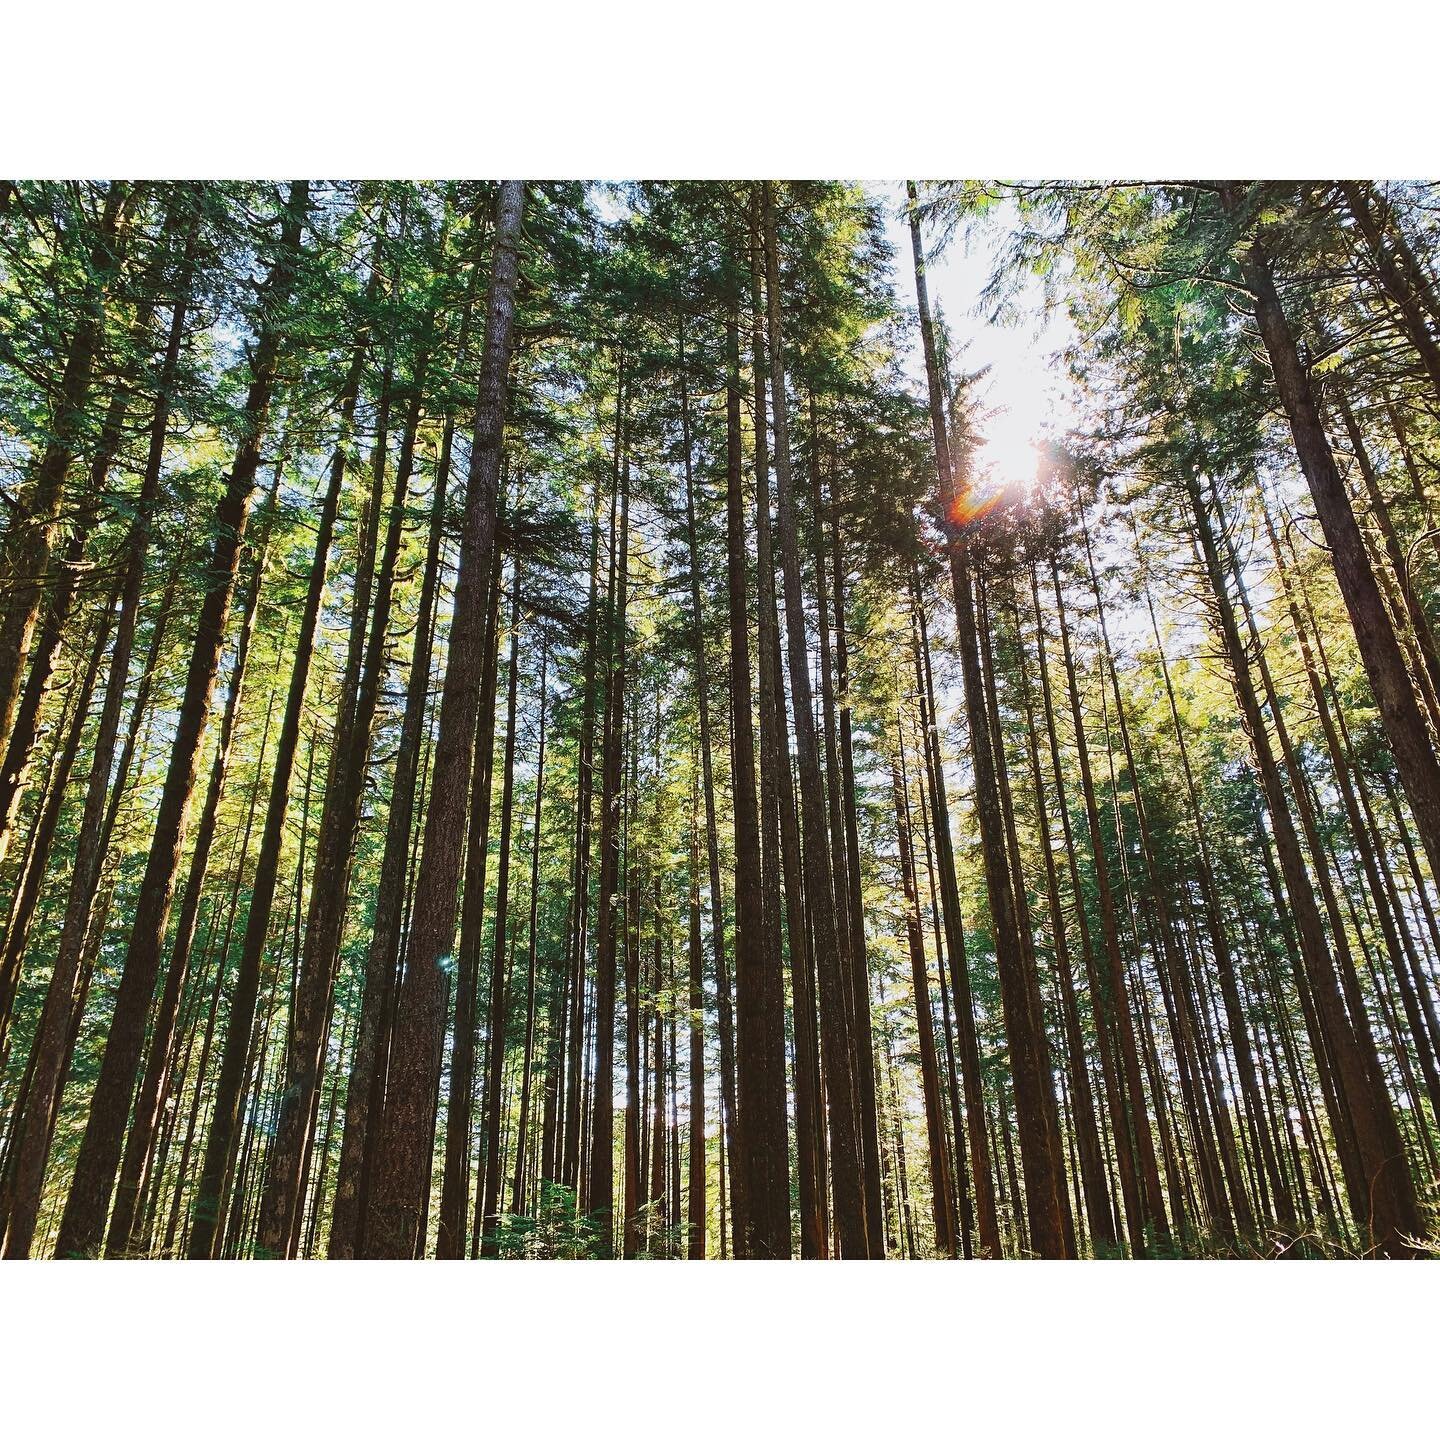 mossy wooded wonderland. #spireanaturetrail #goldenears #hike #solitude #toweringtrees #bcisbeautiful